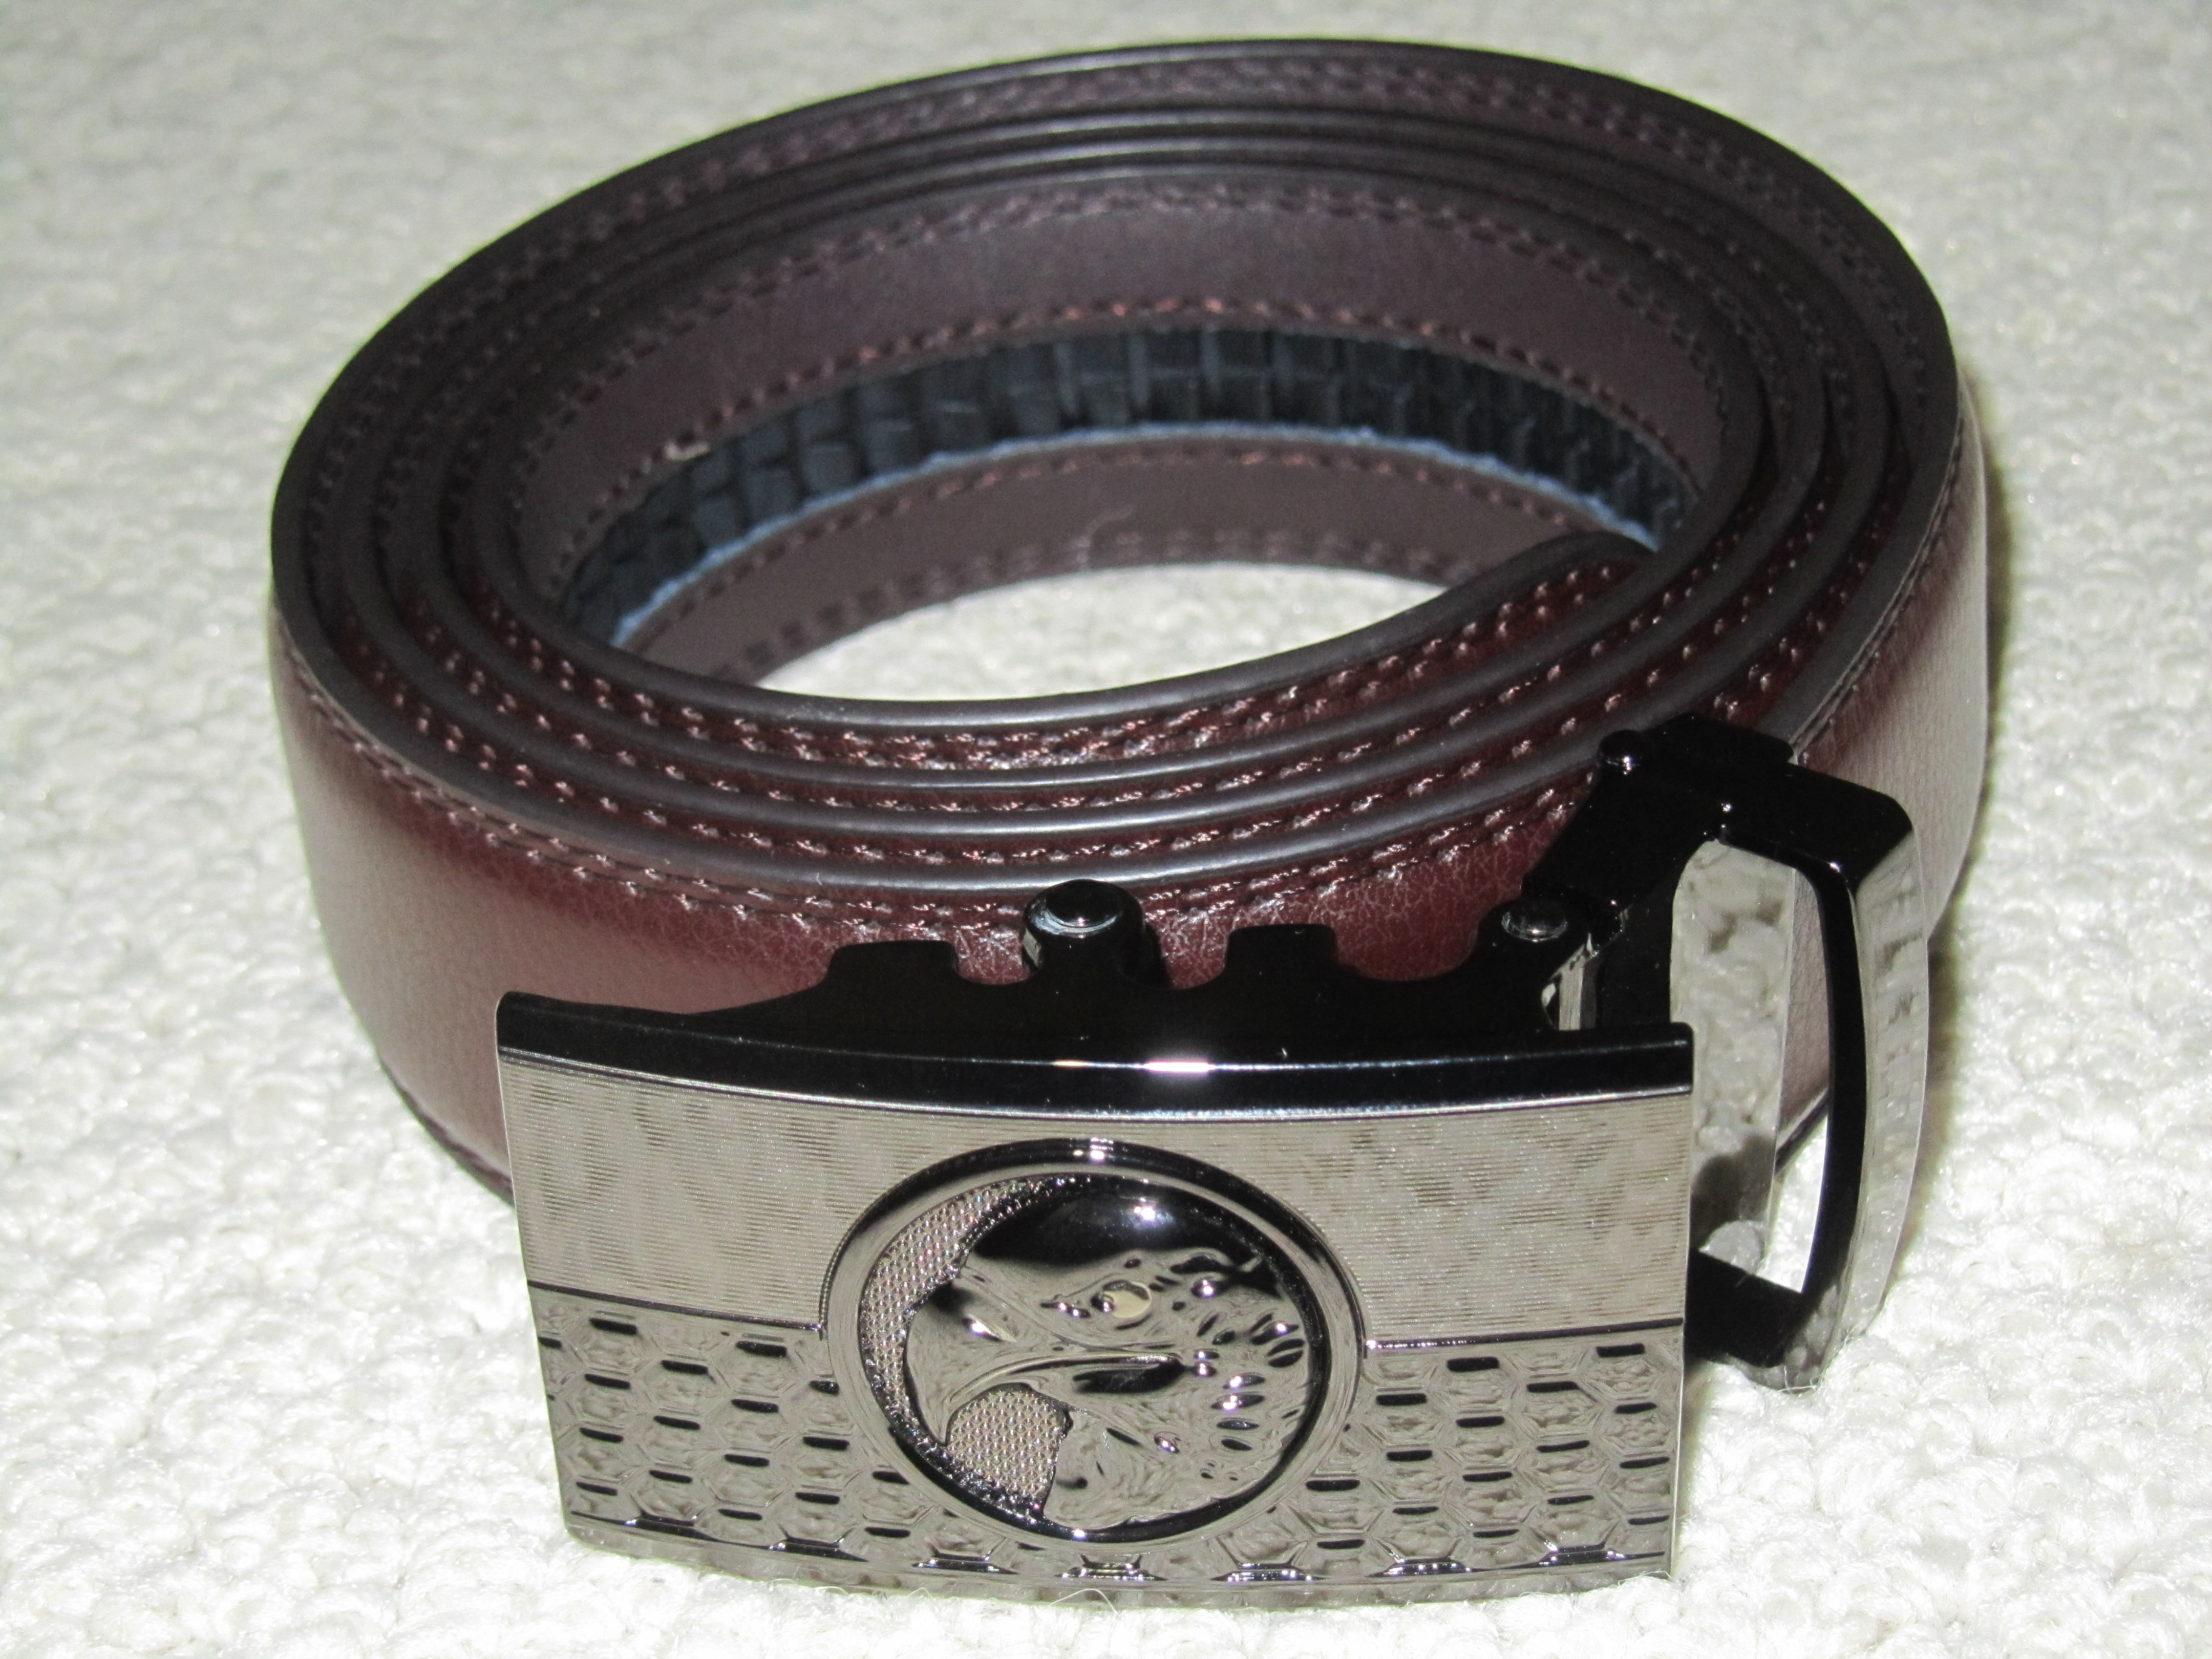  RiverView Enterprise Black Leather Ratchet Dress Belt